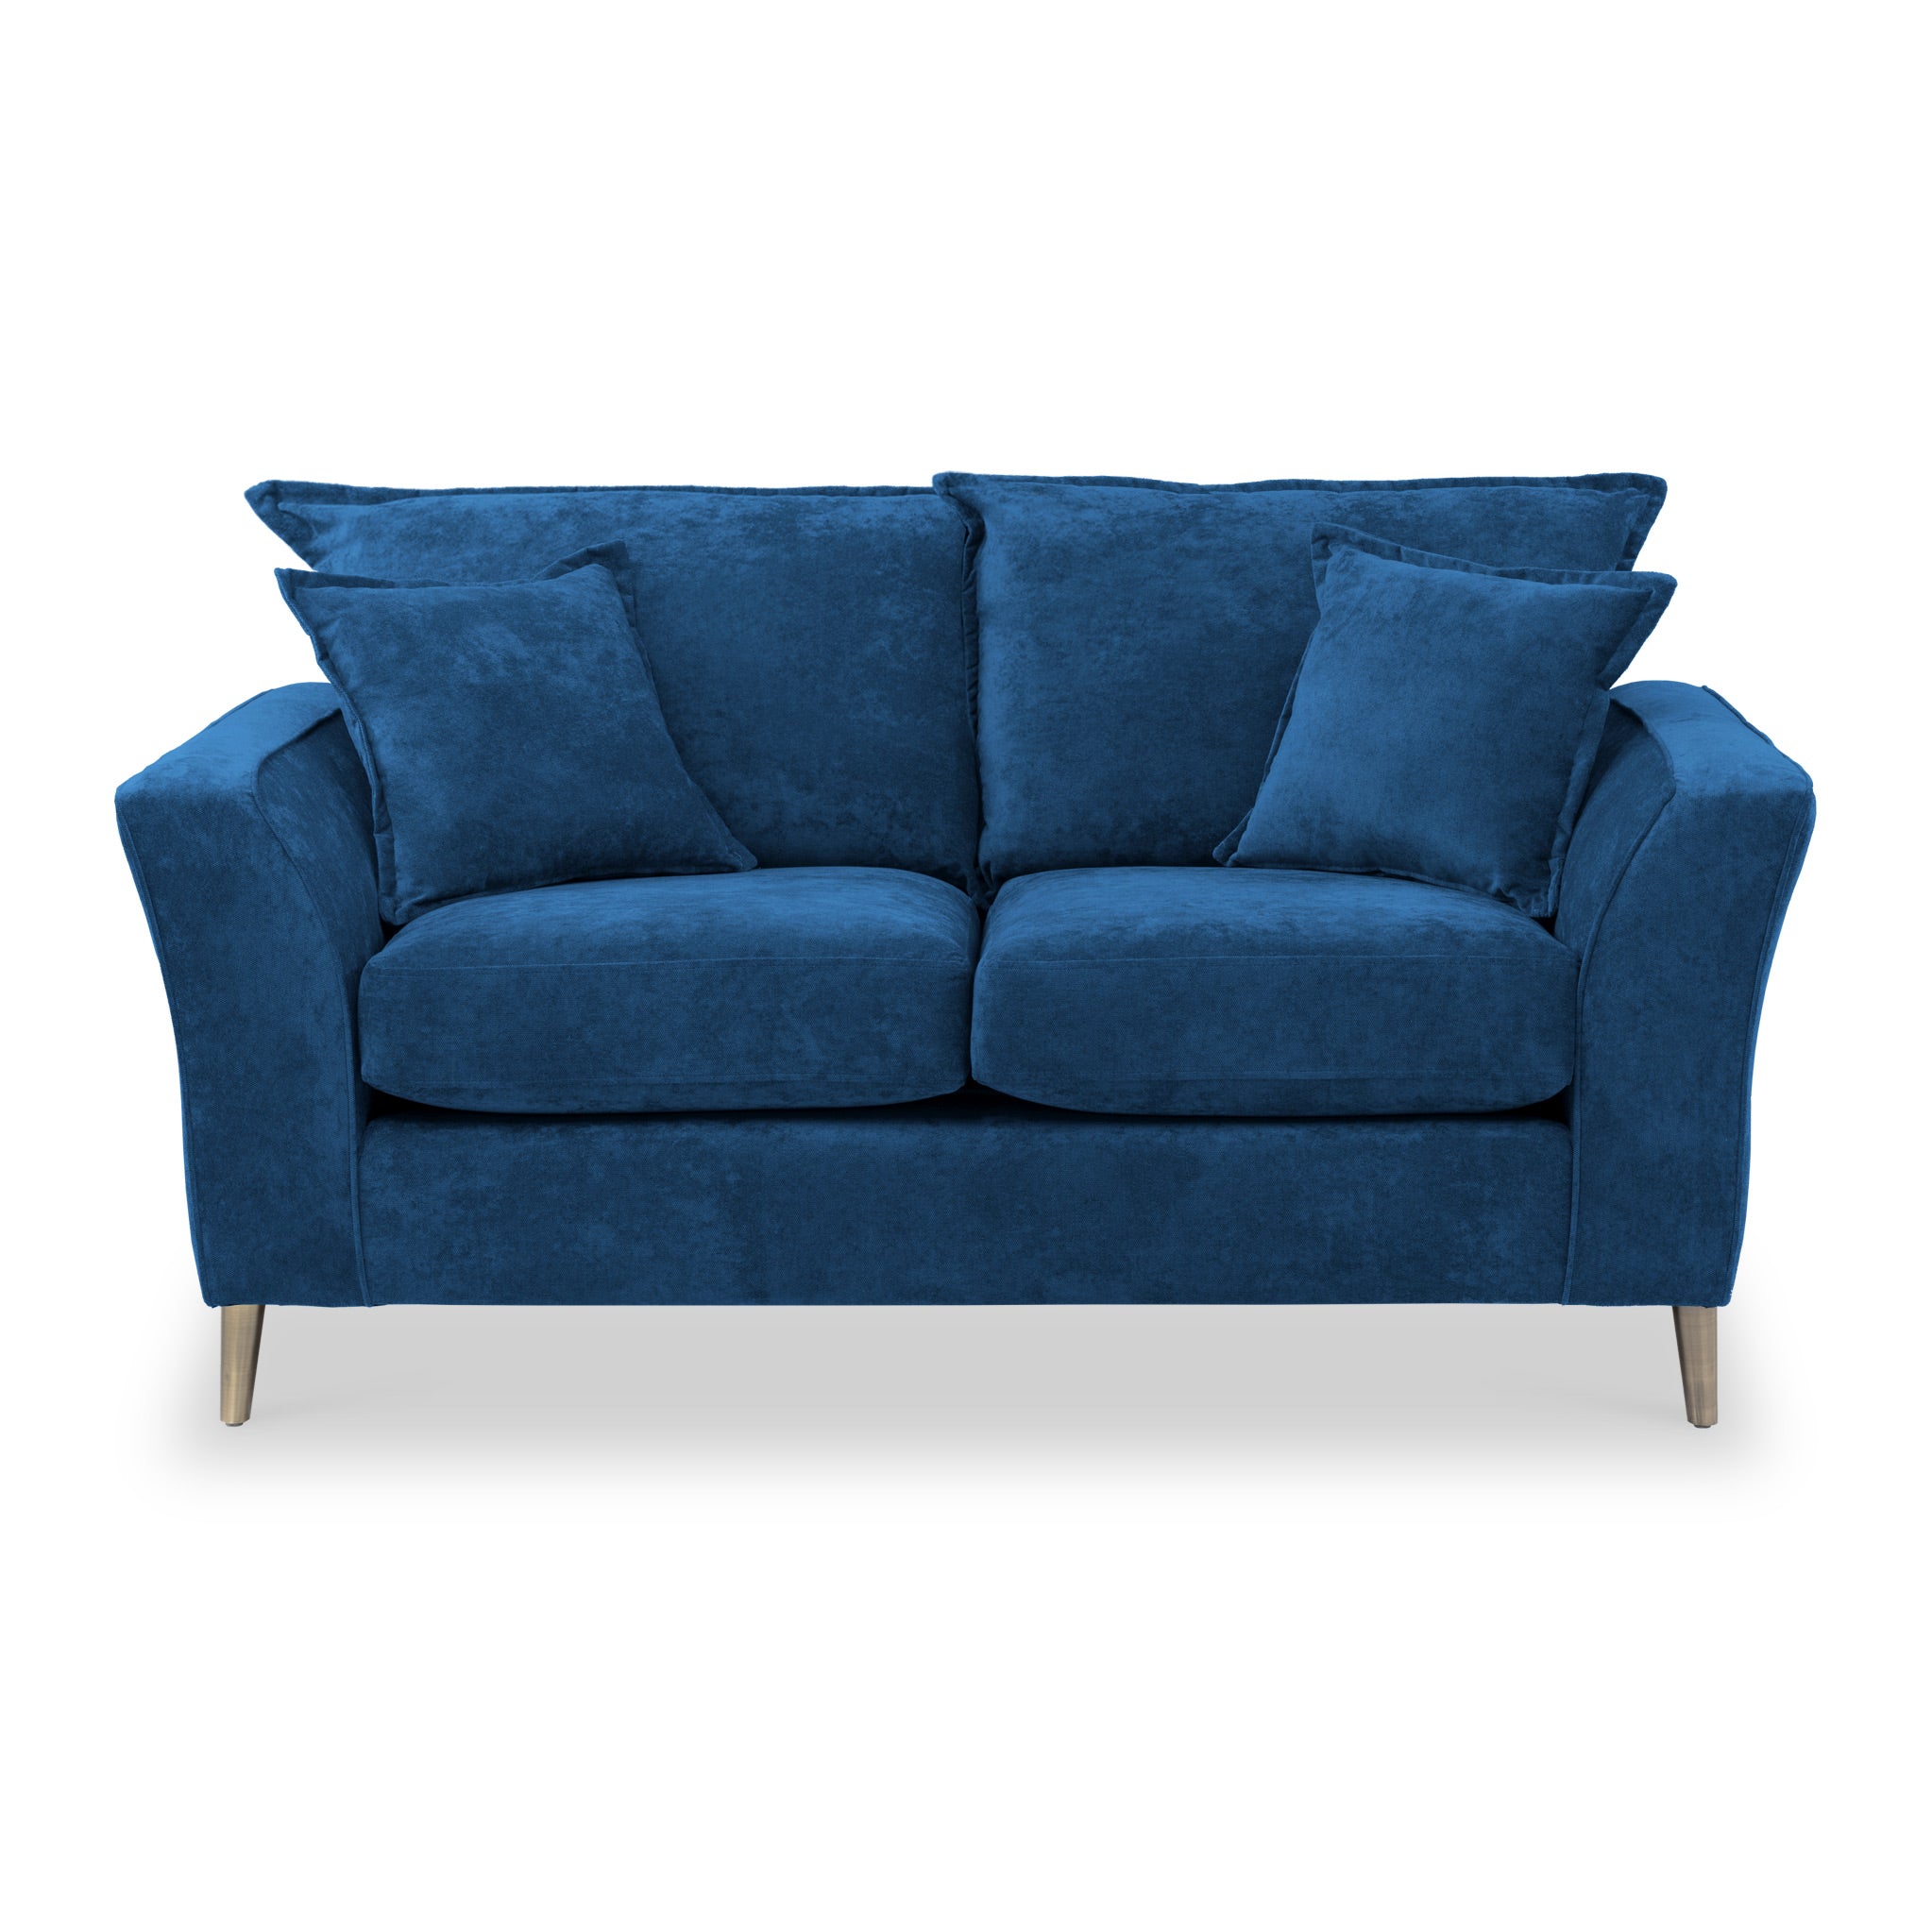 Rupert Pillow Back 2 Seater Sofa 8 Colours Made In Uk Roseland